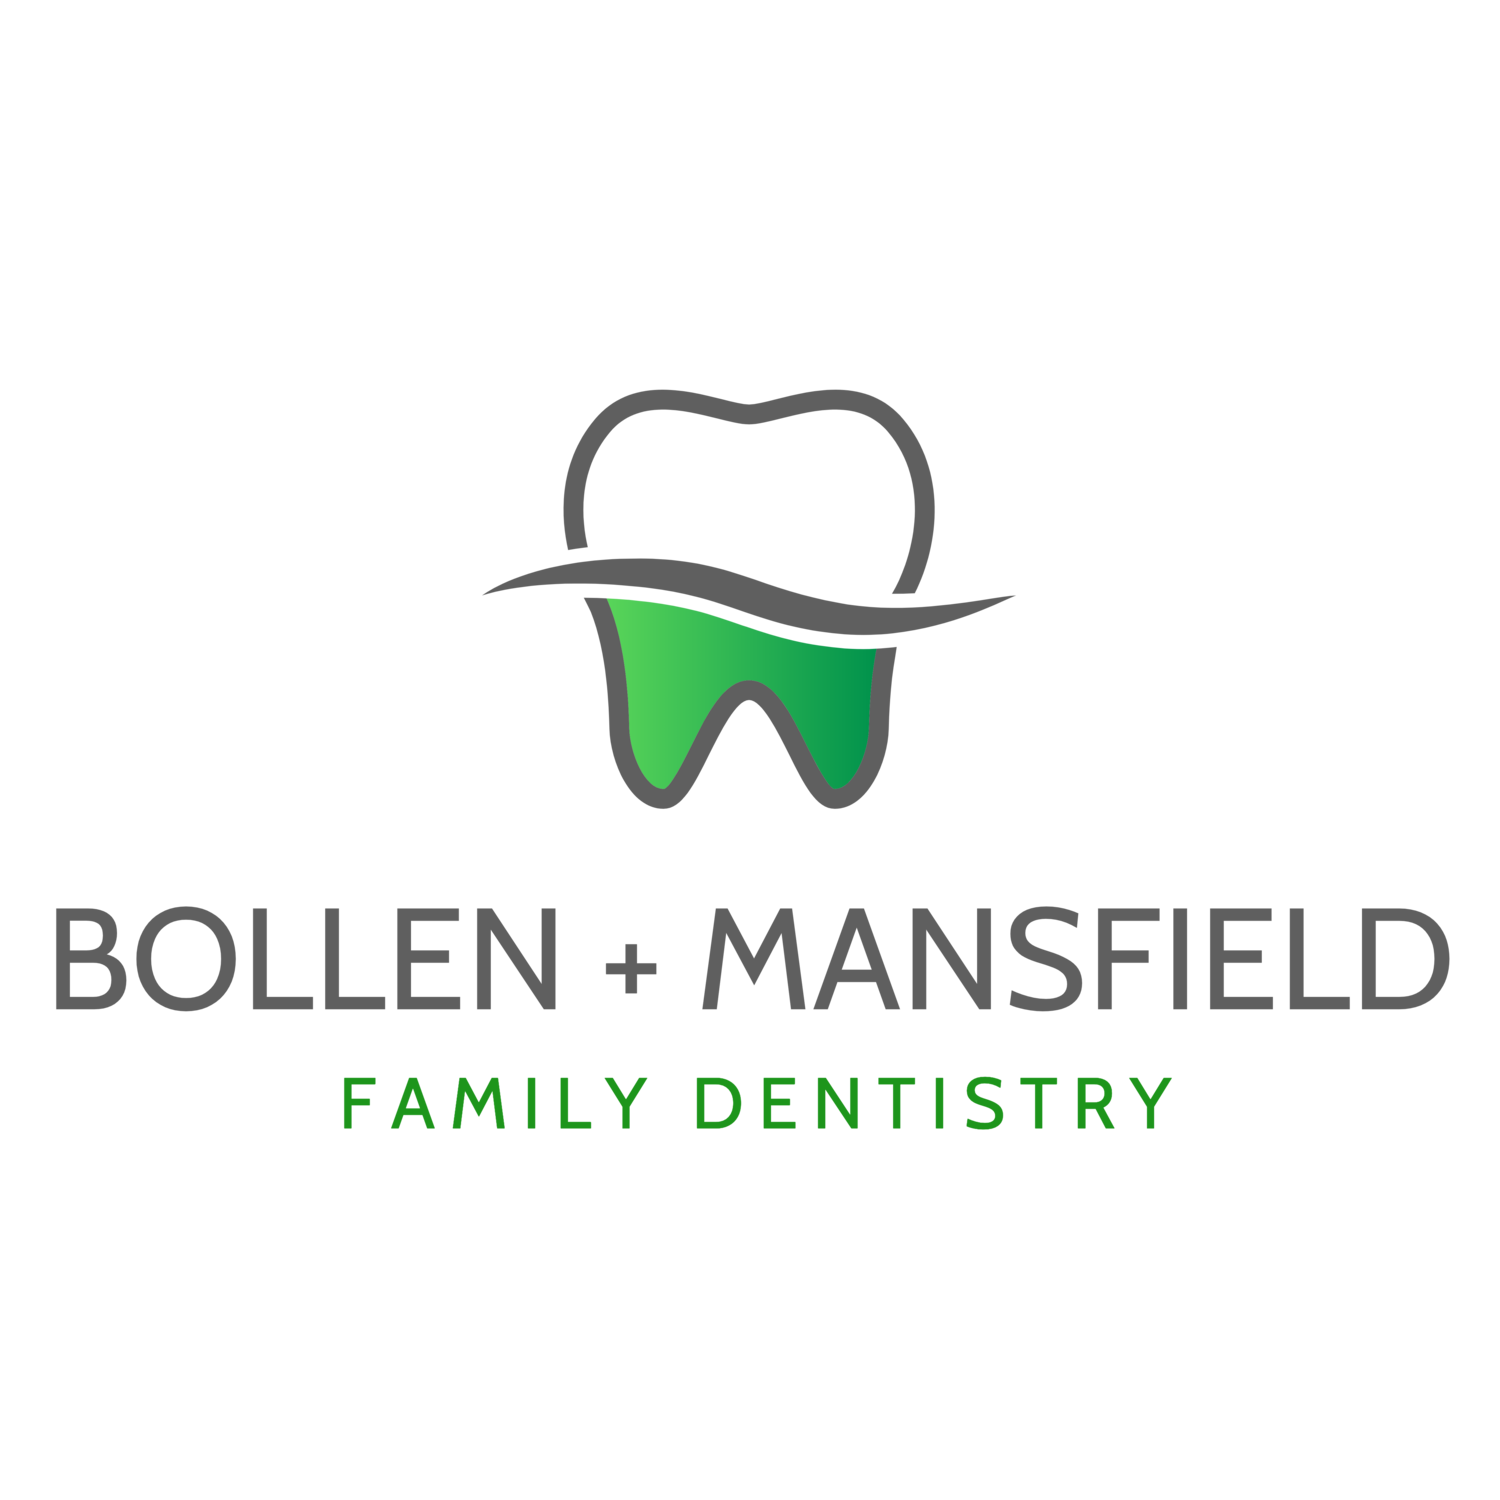 Company logo of Bollen & Mansfield Family Dentistry